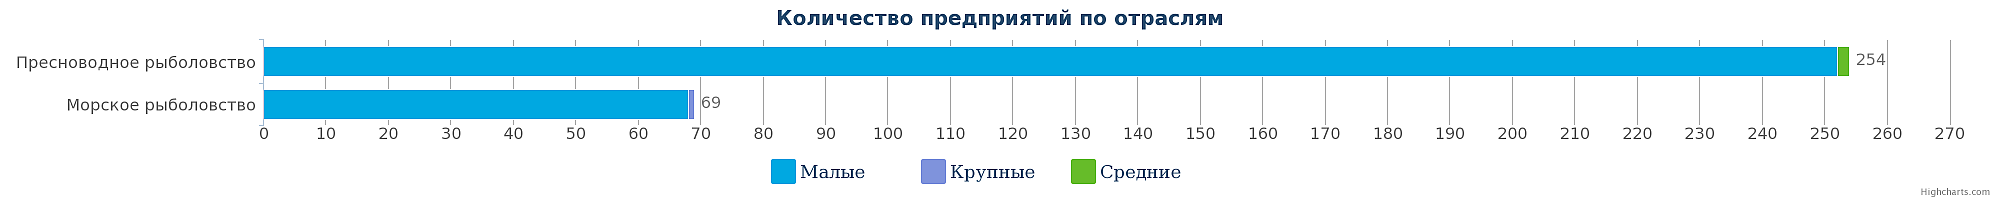 Количество рыболовных компаний Казахстана по размерам предприятия на 27.02.2017